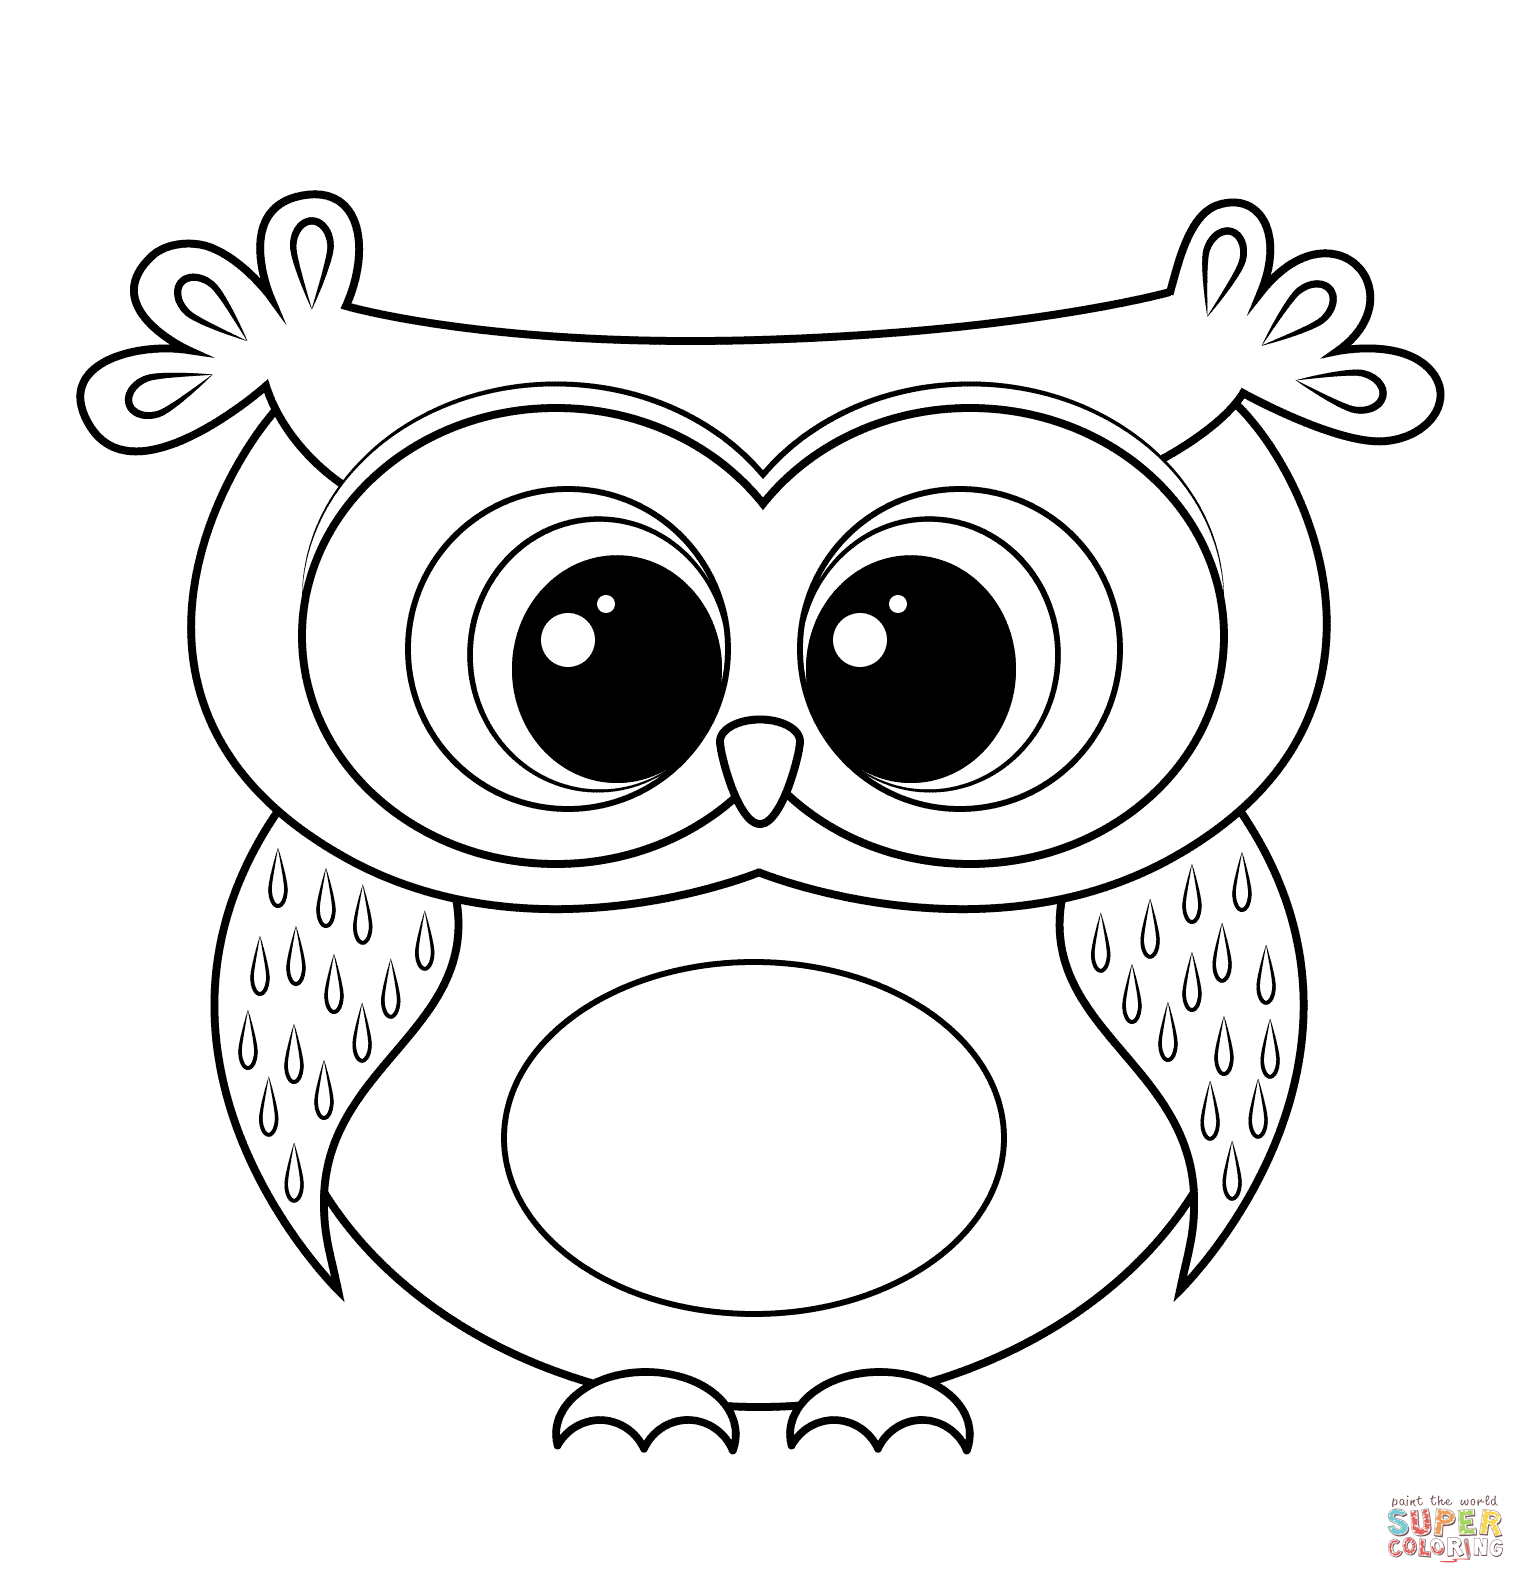 Cartoon Owl Coloring Page | Free Printable Coloring Pages - Free Printable Owl Coloring Sheets